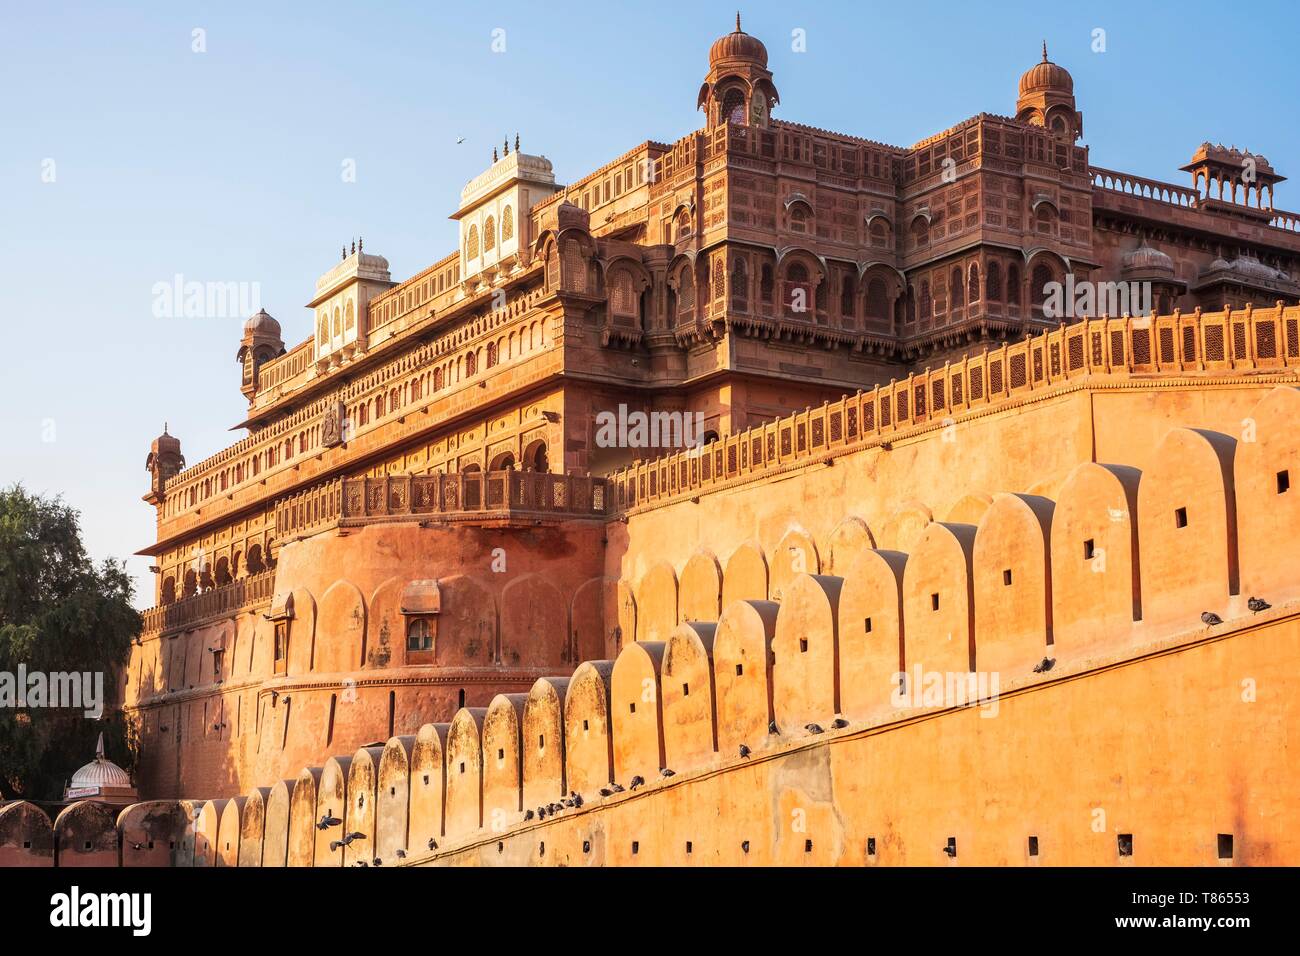 India, Rajasthan, Bikaner, Junagarh Fort built in the 16th century Stock Photo